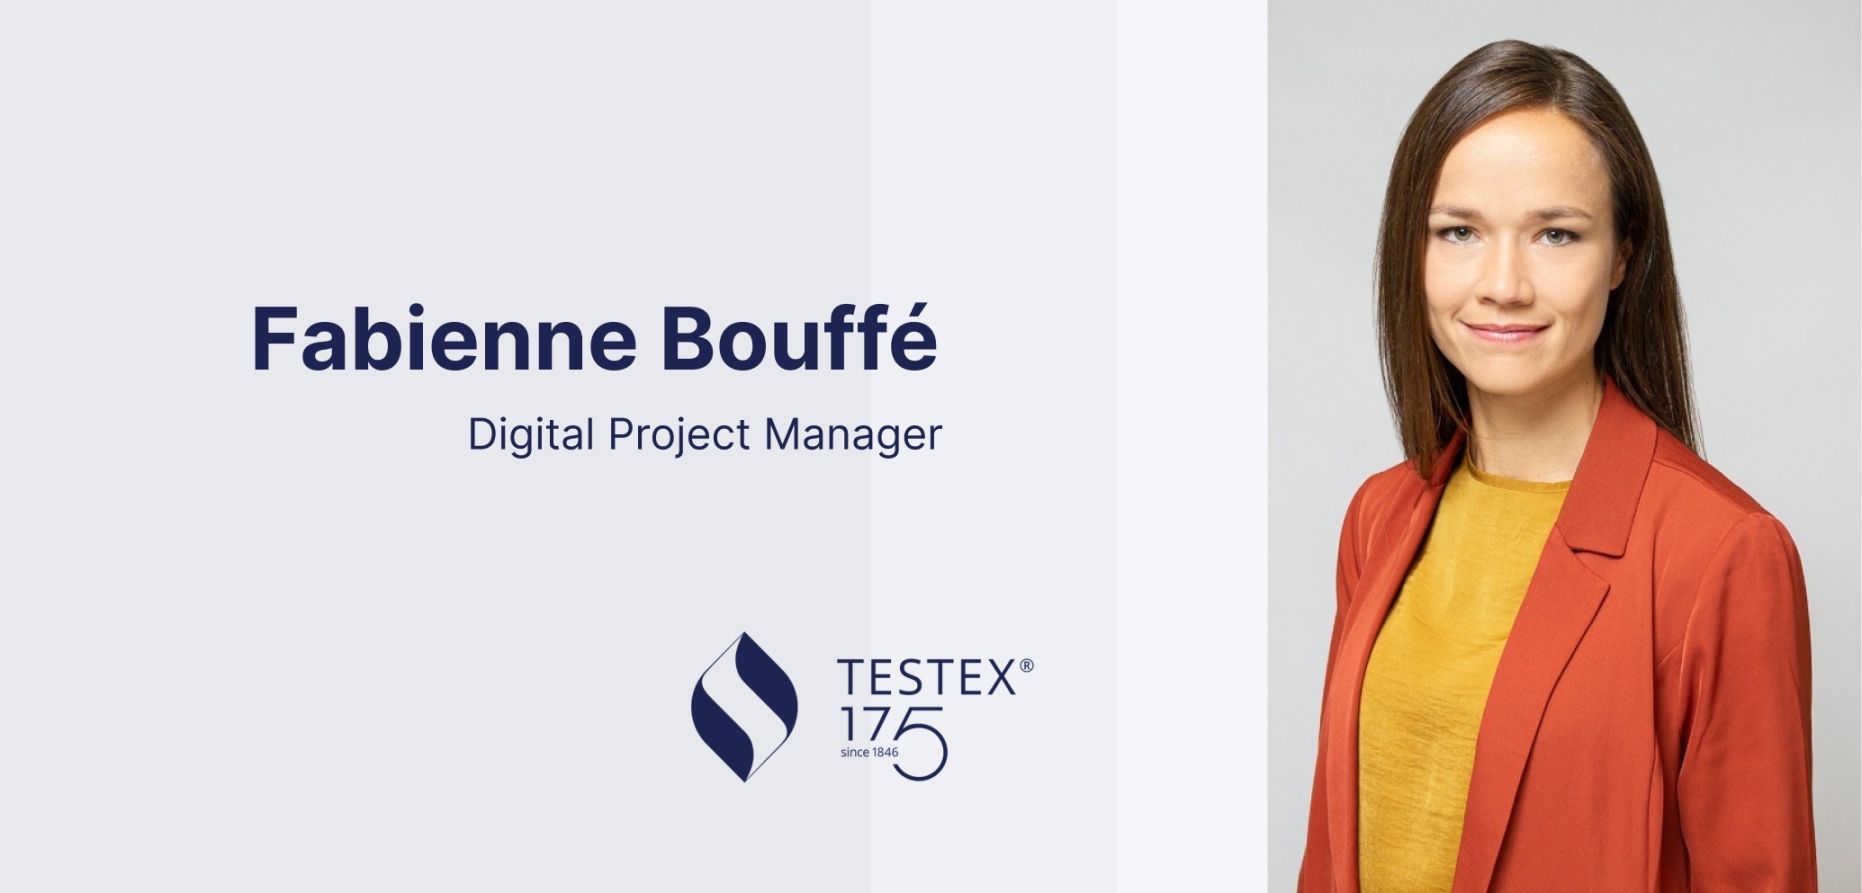 fabienne bouffe digital project manager in testex